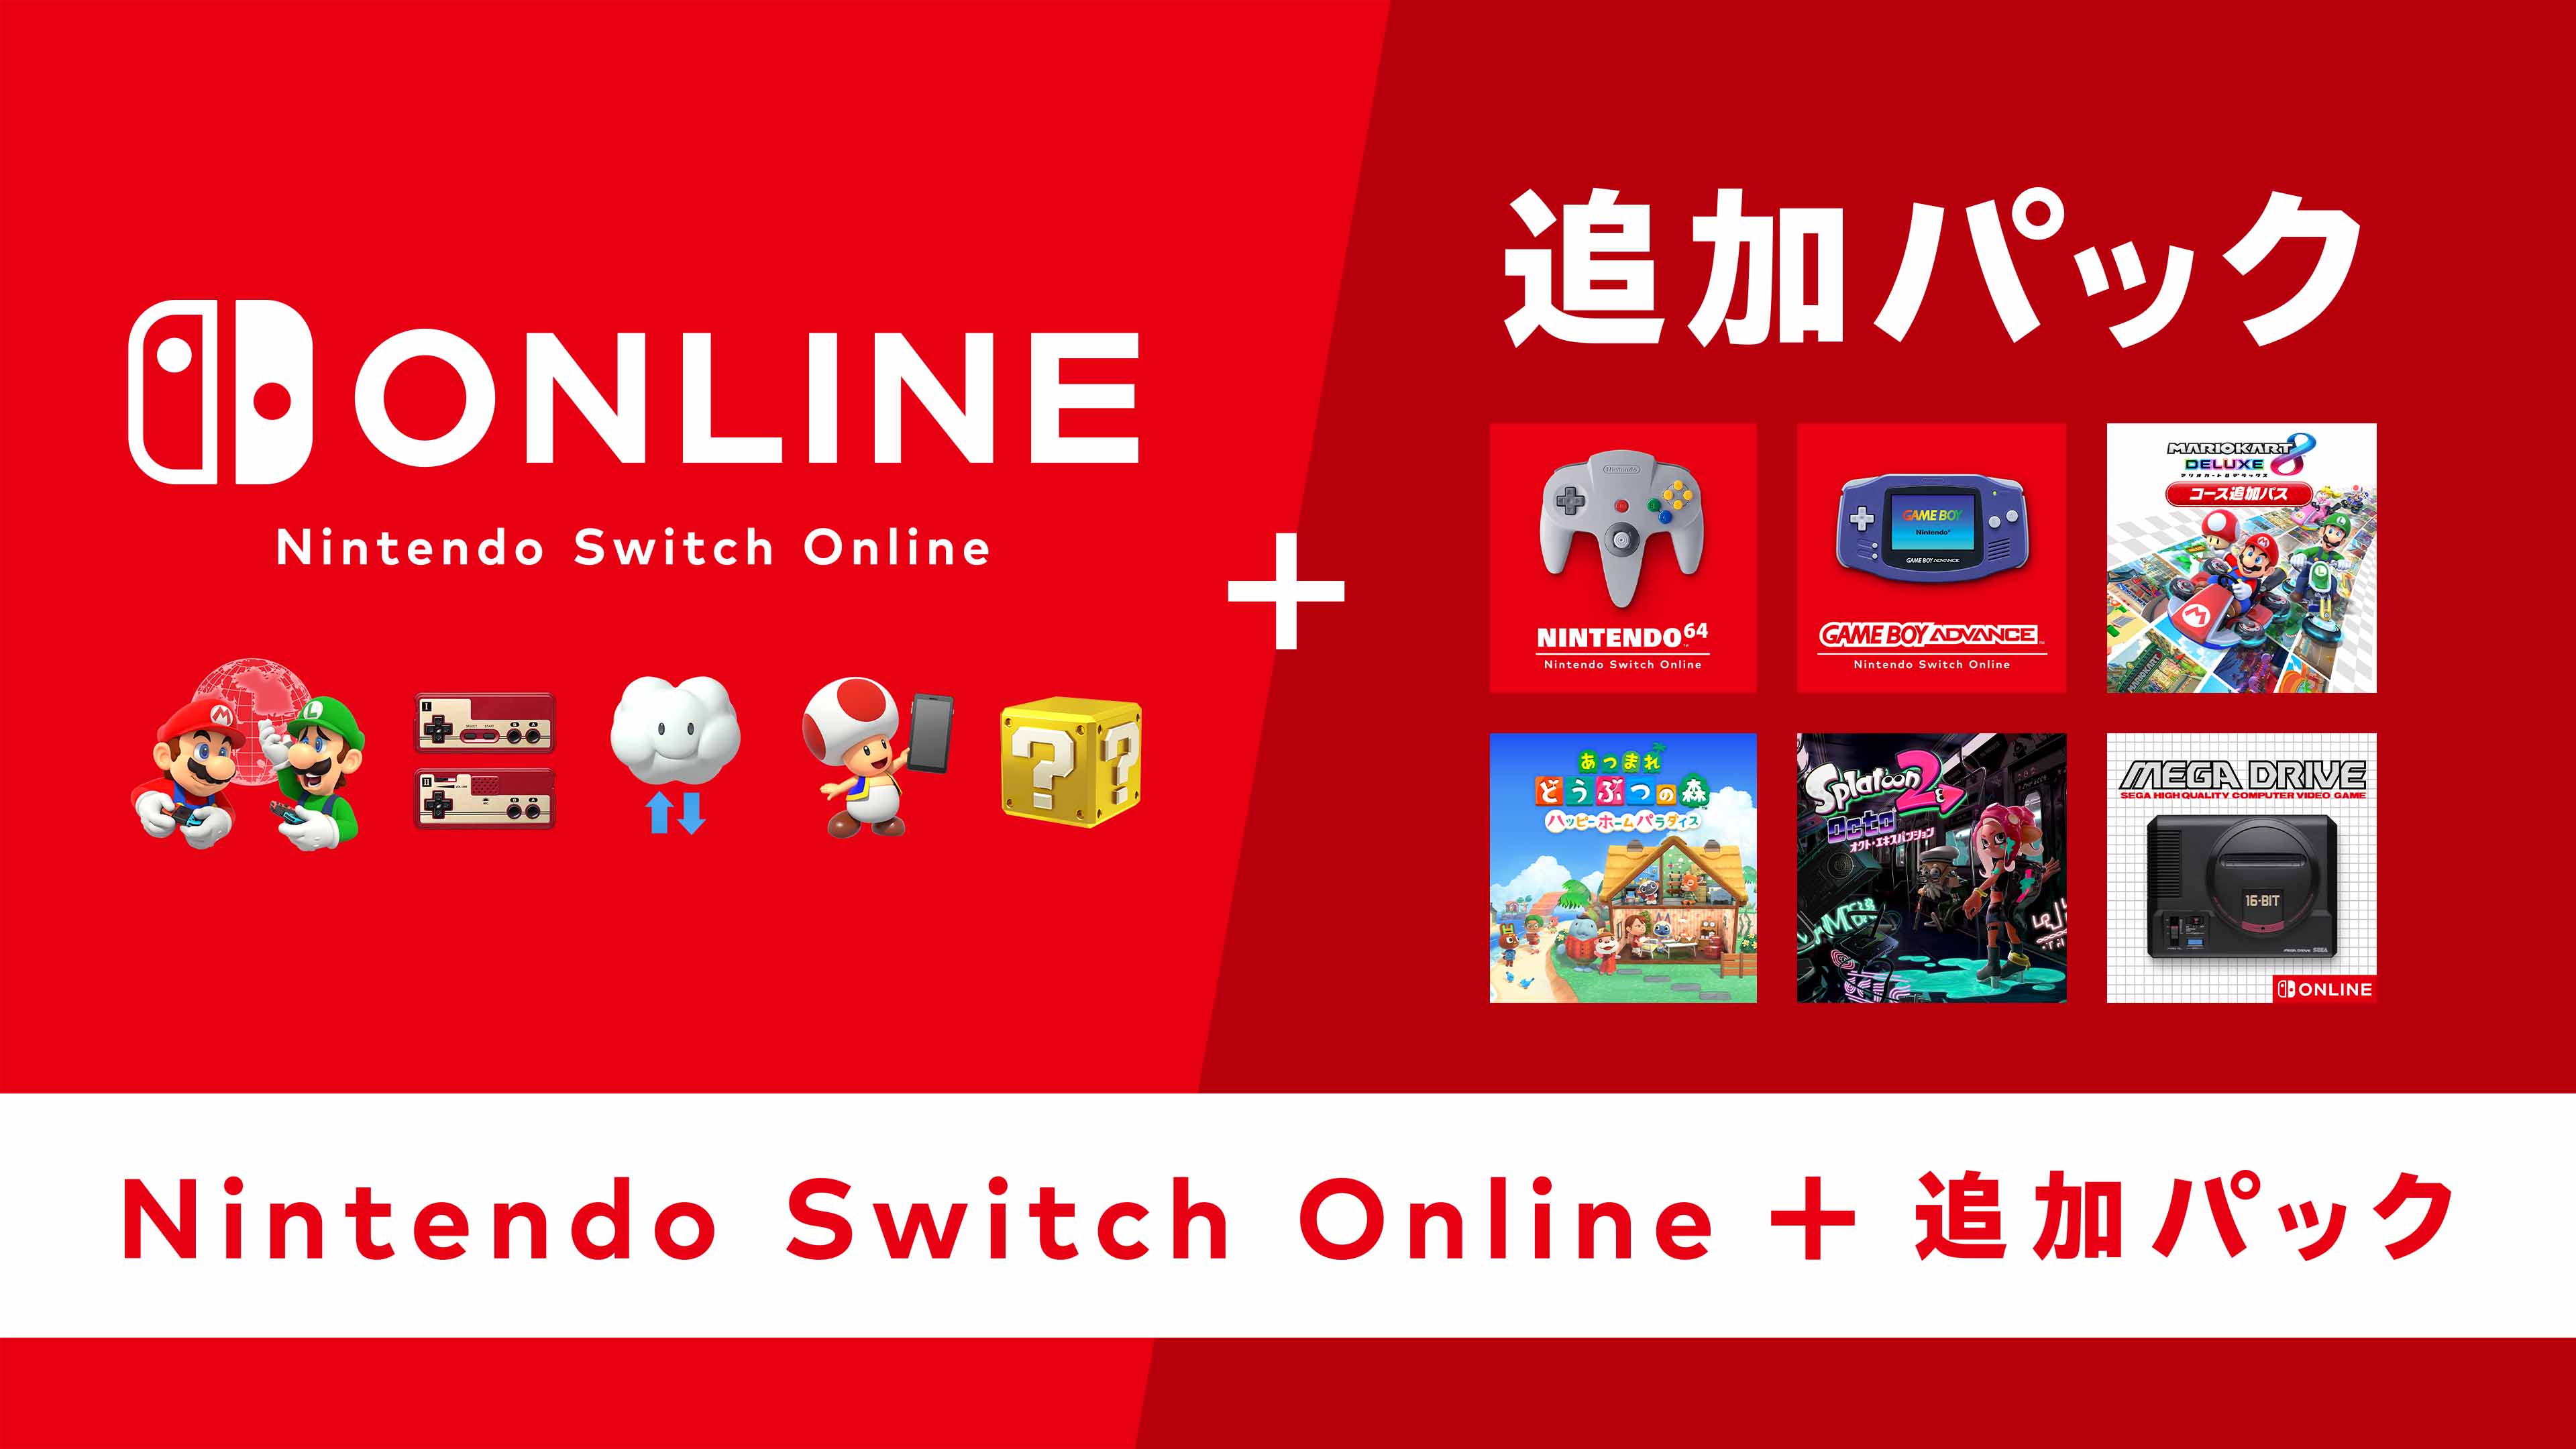 Nintendo Switch Online + 追加パック」特集 | My Nintendo Store